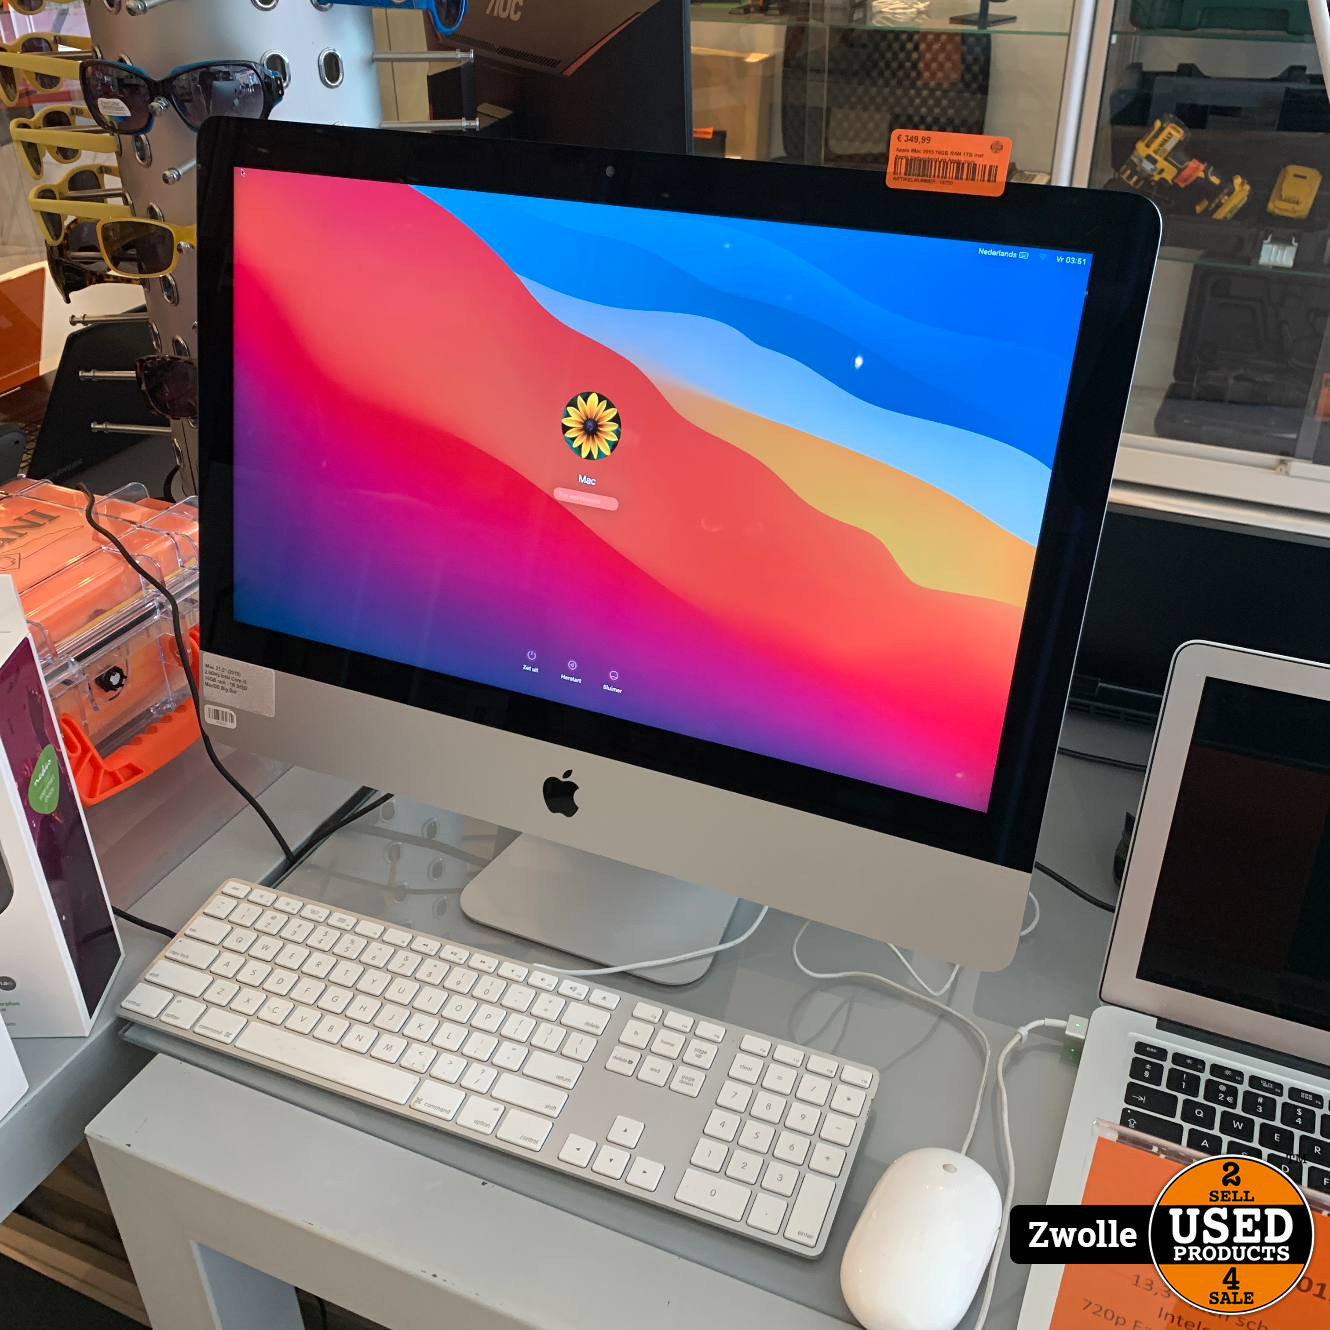 Boer geleider Bedrijfsomschrijving Apple iMac 2015 16GB RAM 1TB met Apple toetsenbord en Apple muis - Used  Products Zwolle